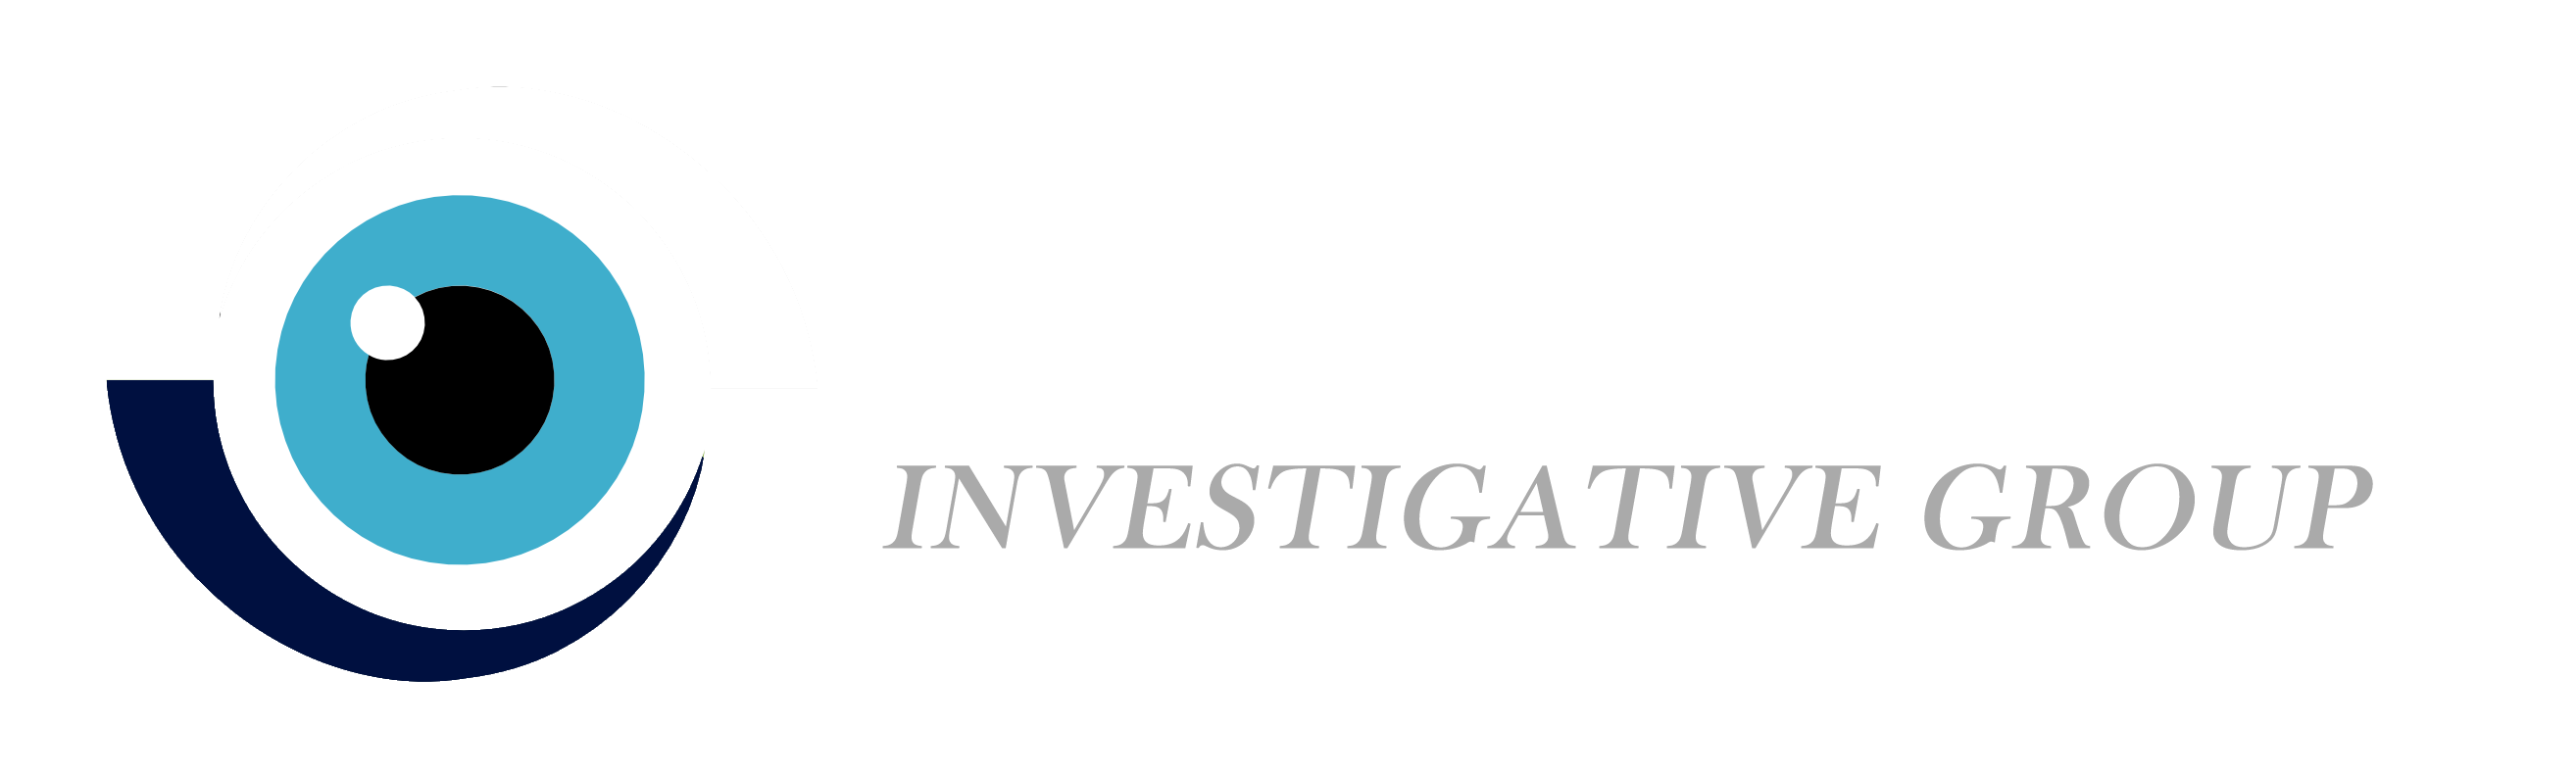 Heritage Investigative Group